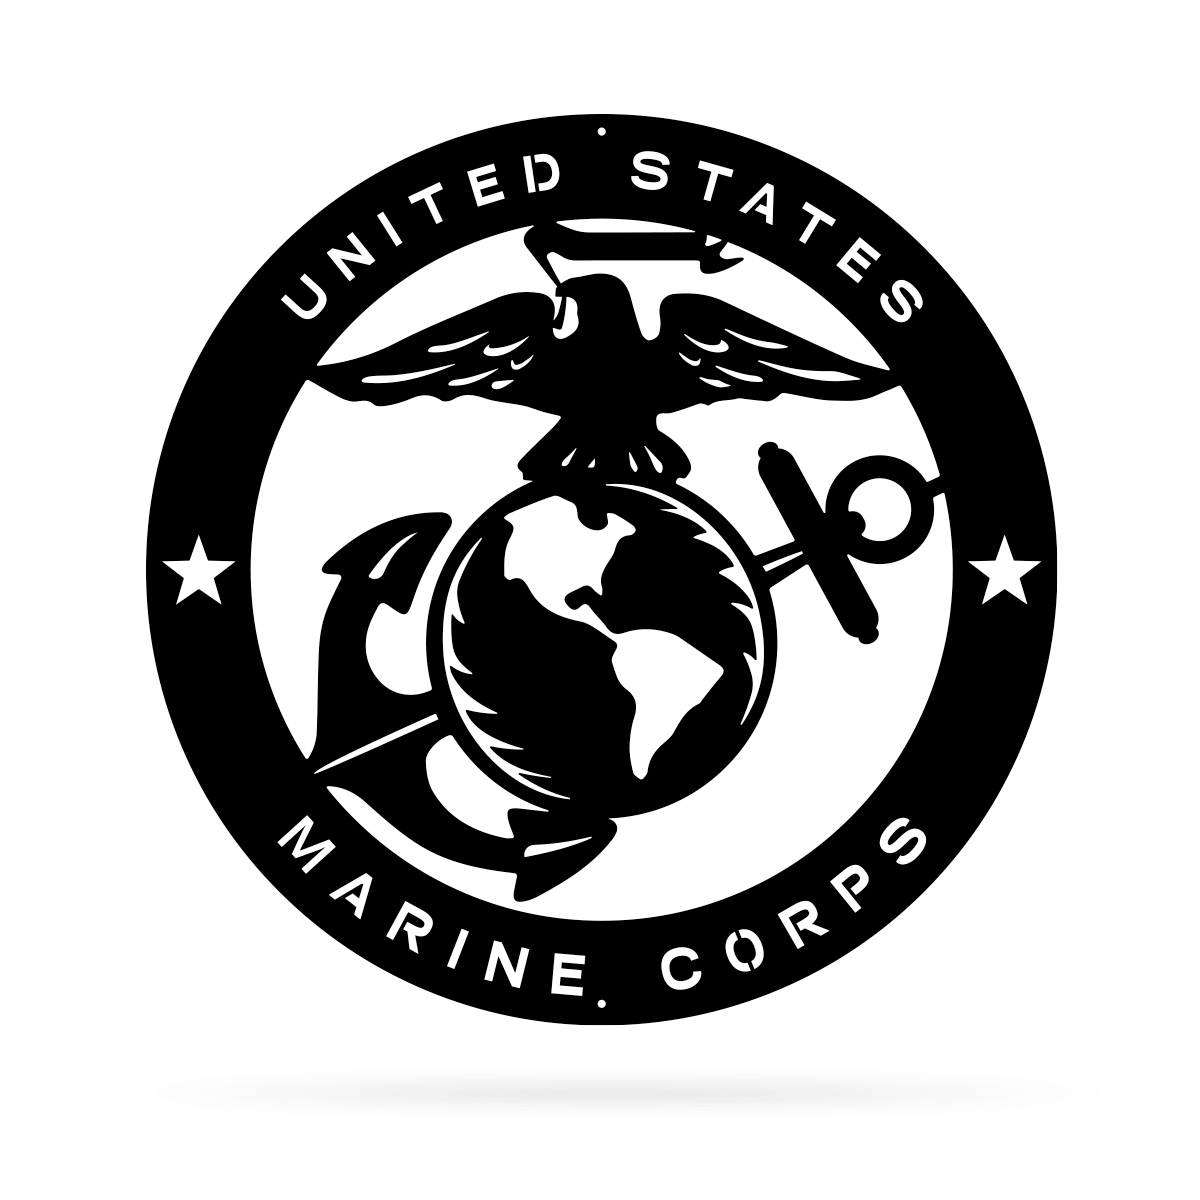 US Marine Corps  - RealSteel Center